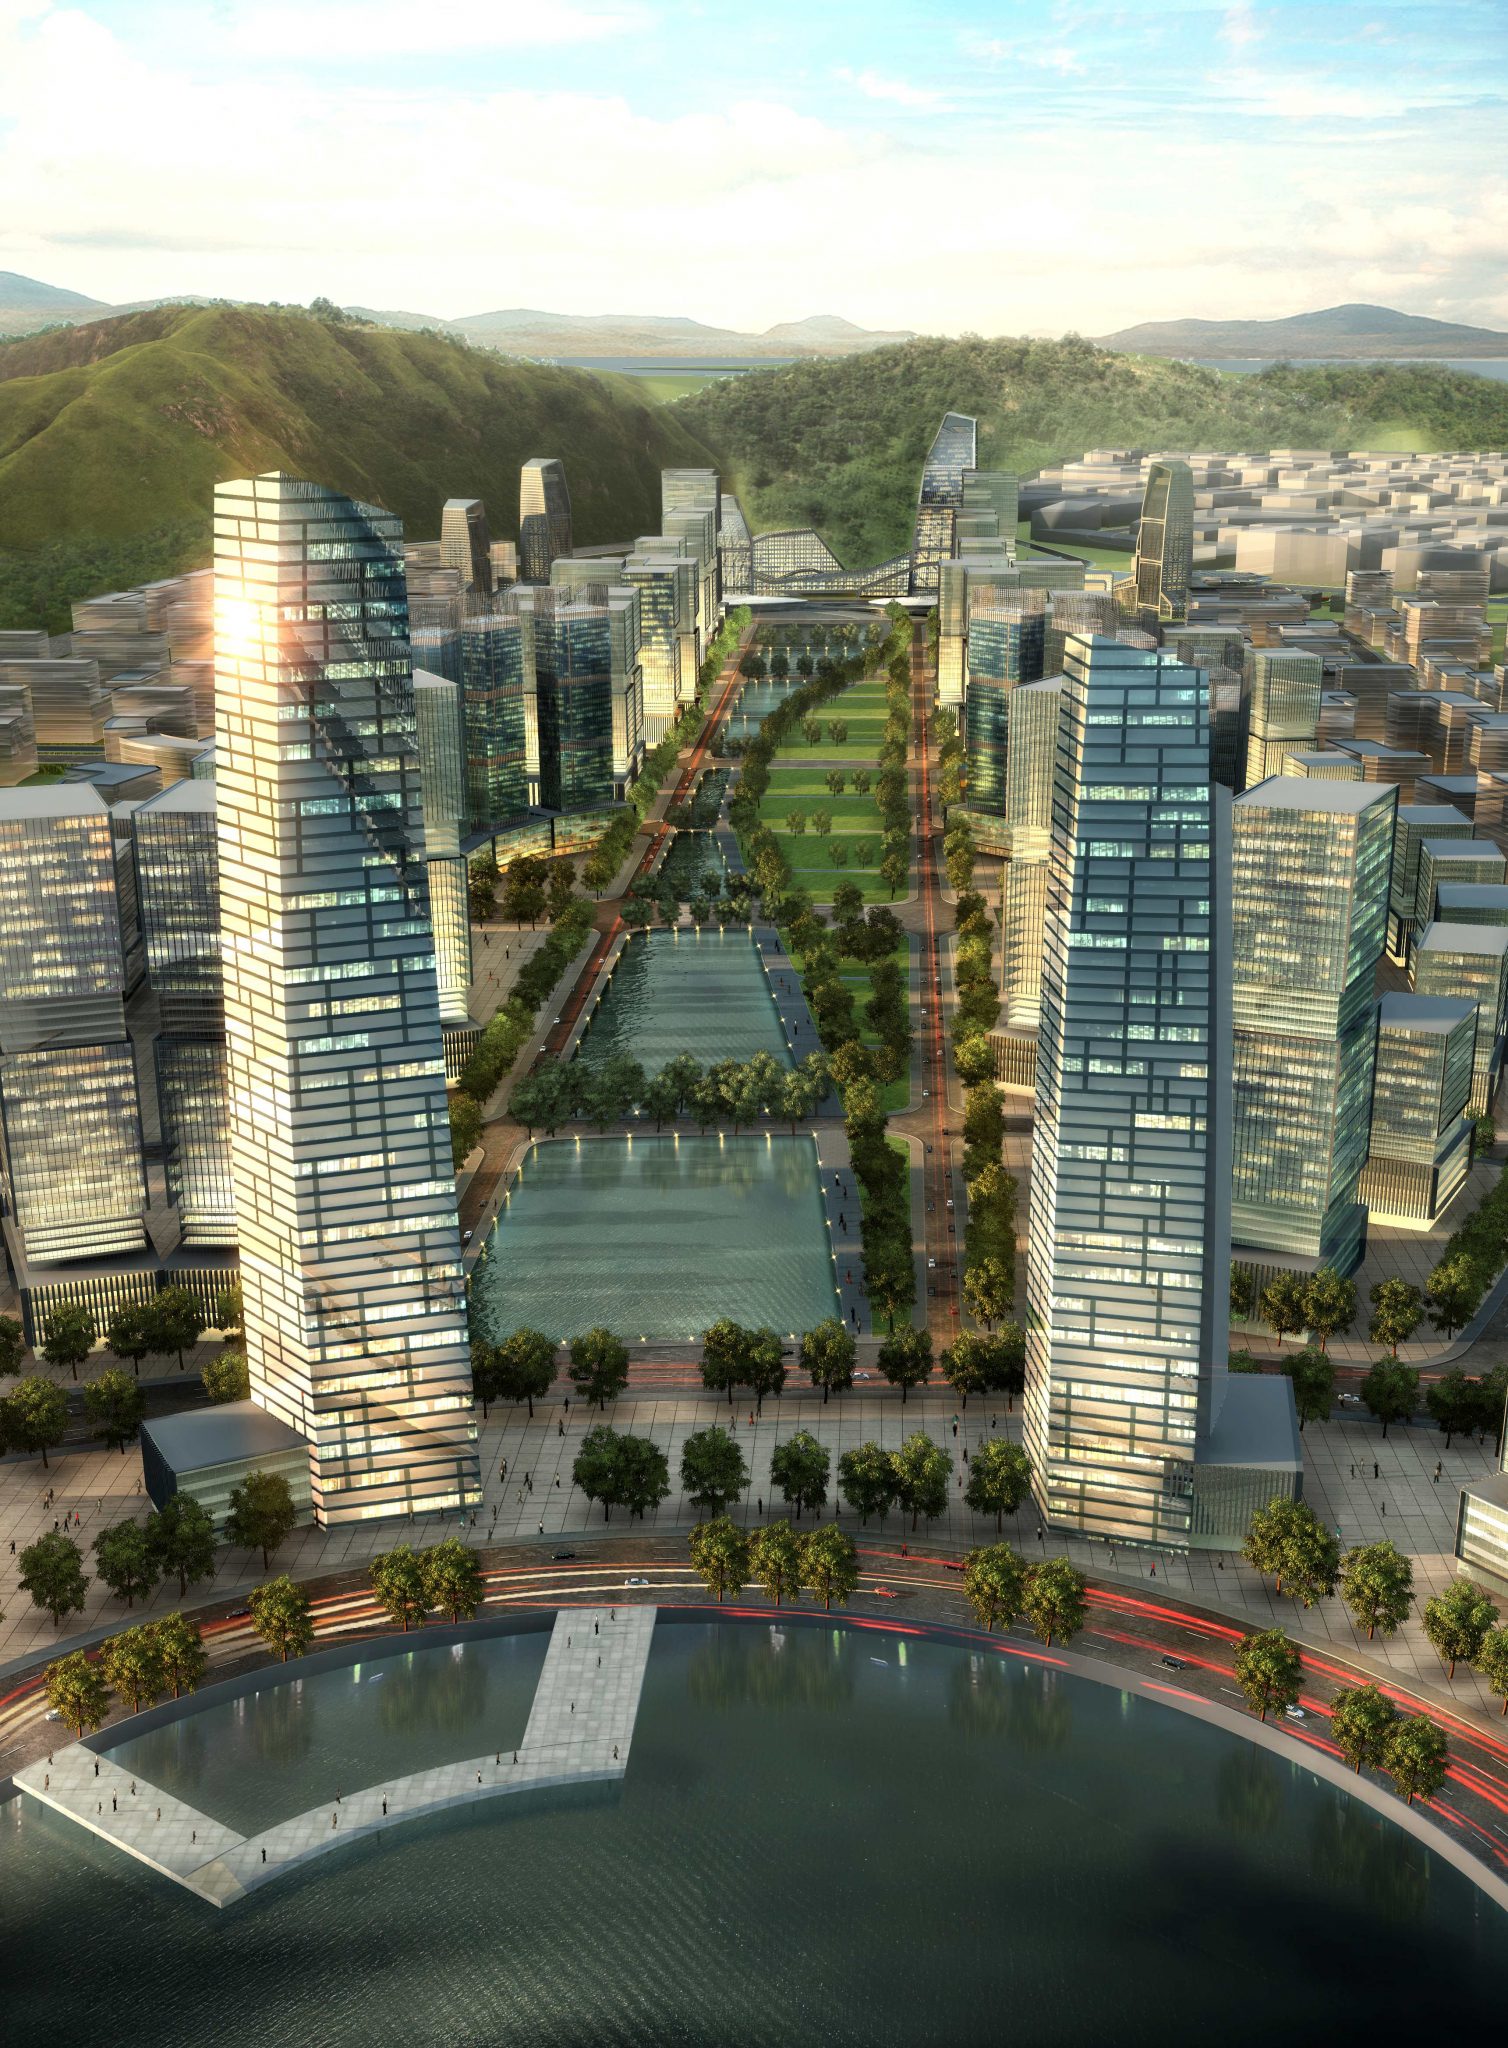 Pingtan Urban Development Lemay Architecture asd